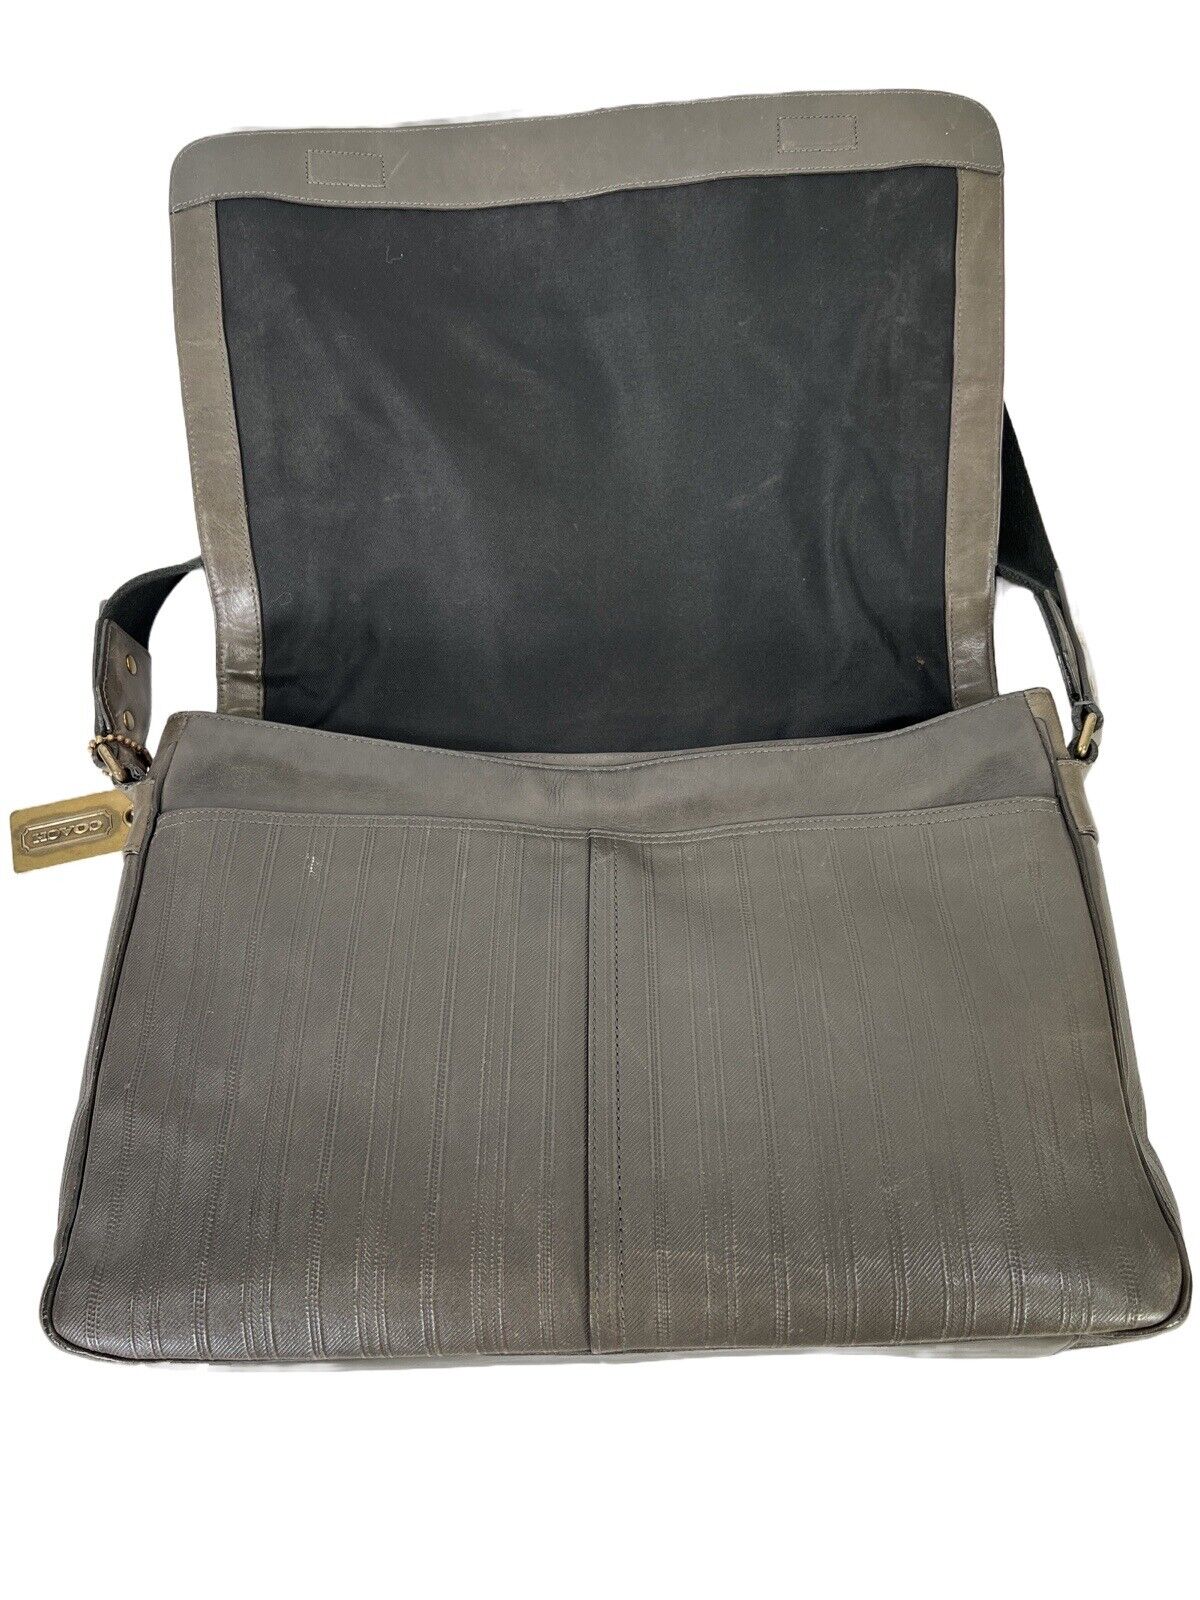 Coach Men's Gray Leather 70th Anniversary Rare Bleecker Messenger Bag